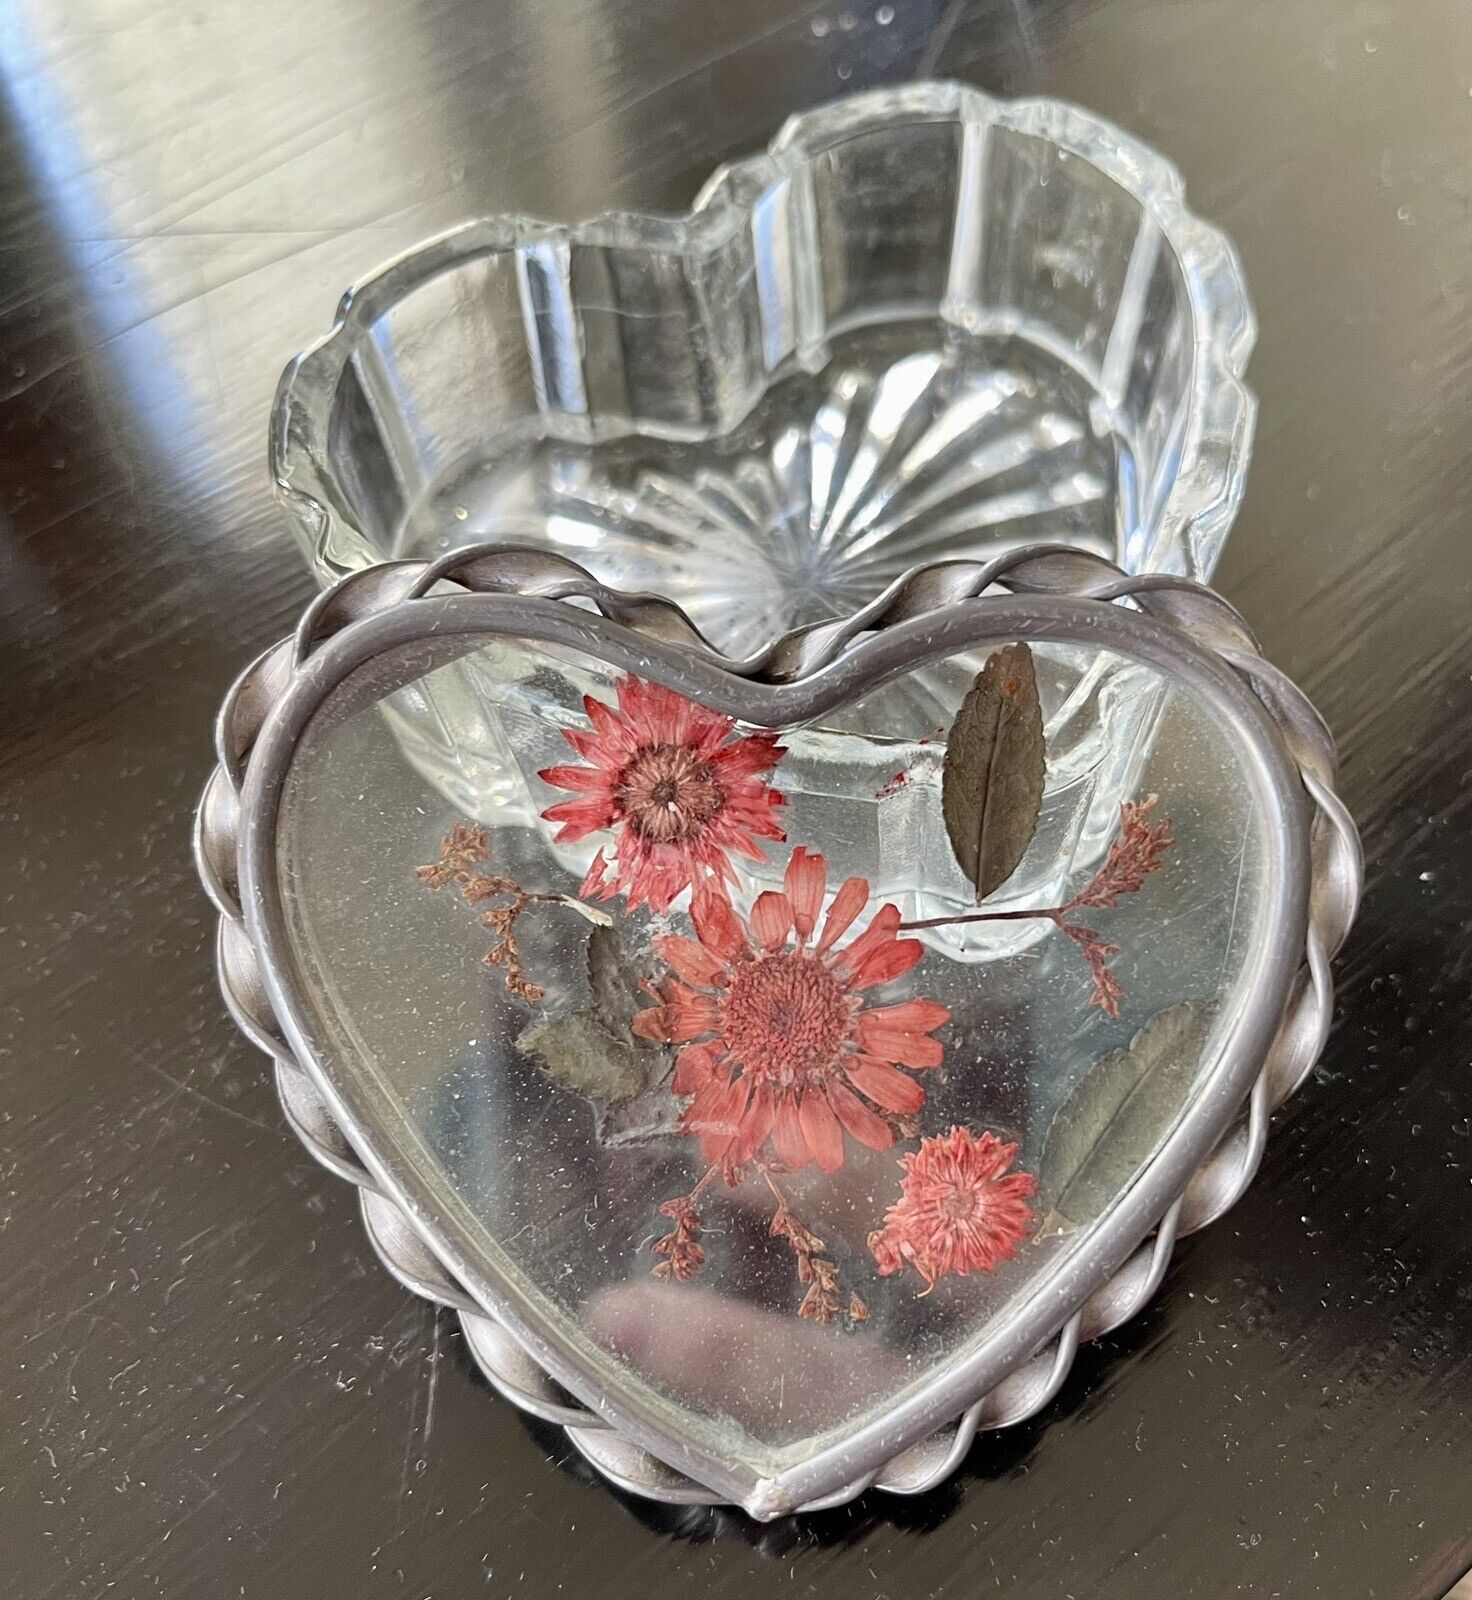 Vntg Heart-Shaped Glass Candle Holder Trinket Dish Pressed Flower Lid Boho Chic